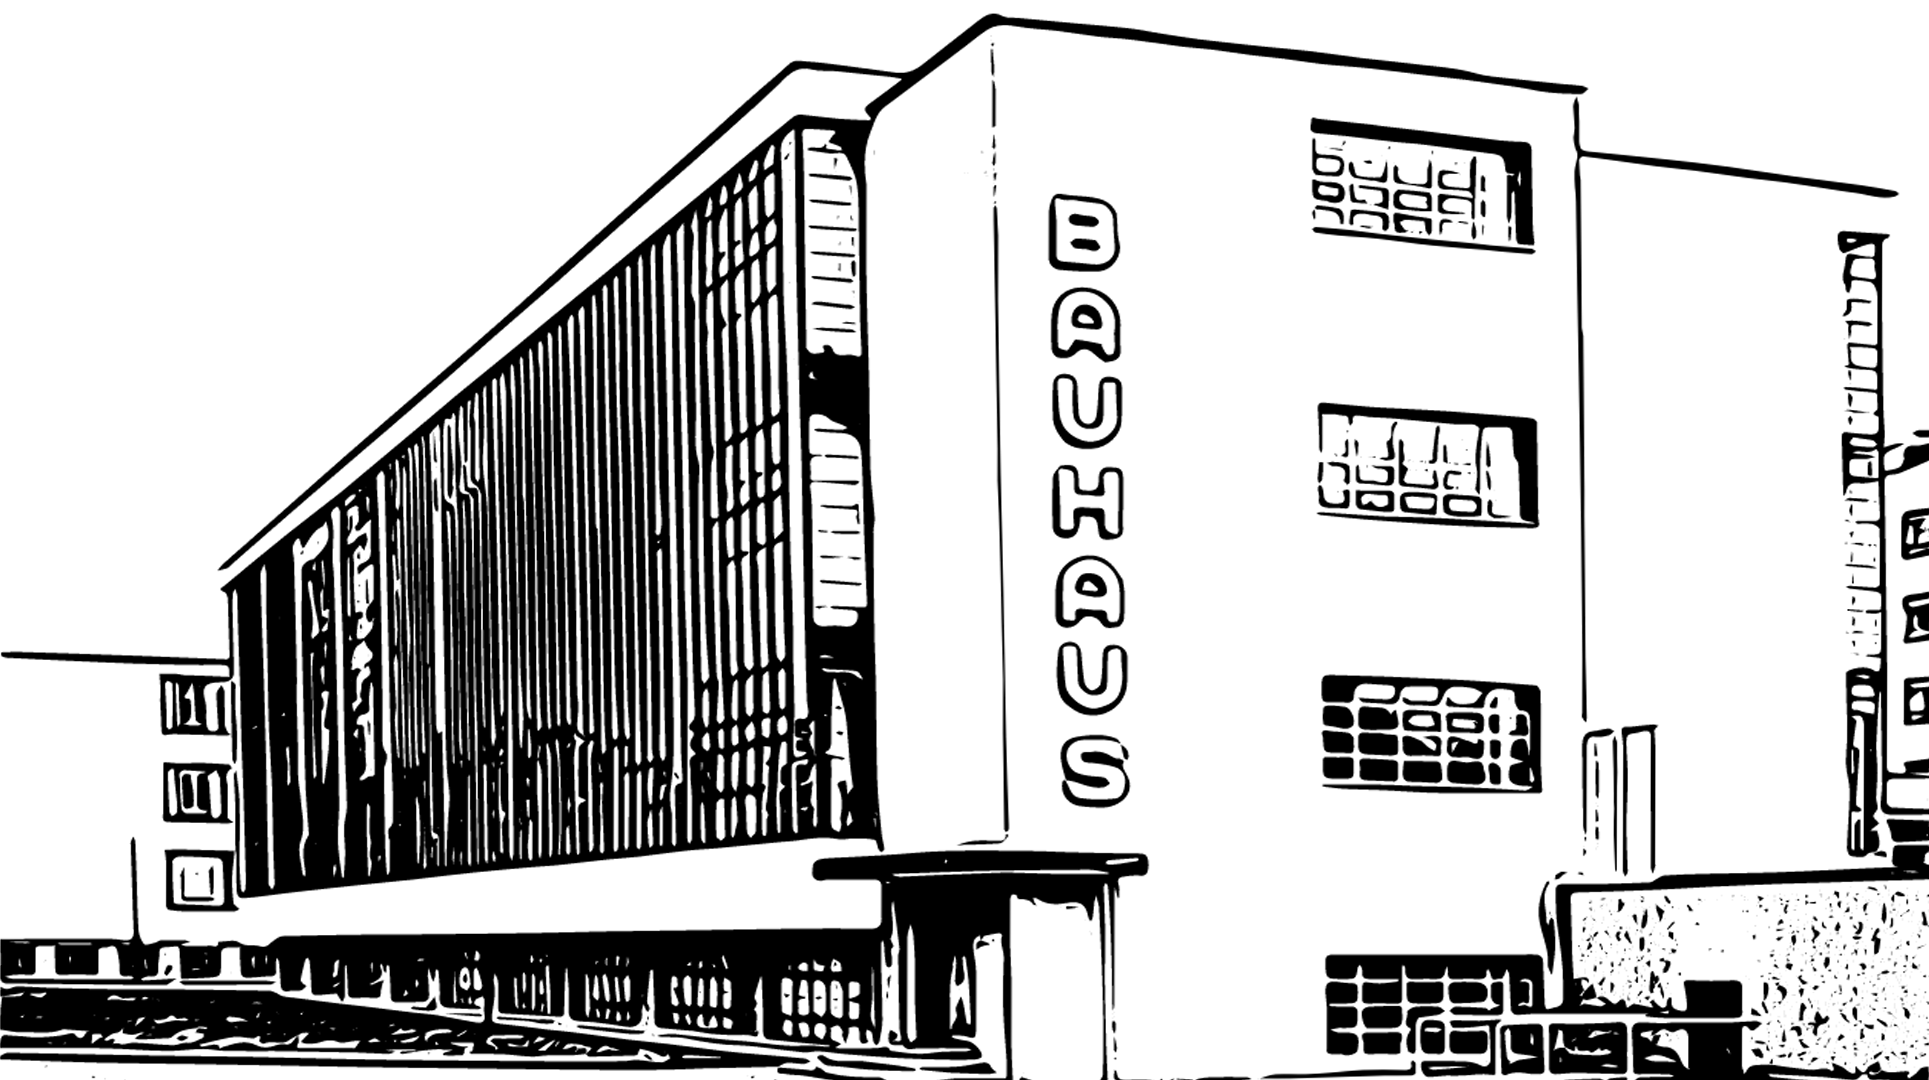 Drawing Sketch Illustration Bauhaus Style Architecture vector de stock  libre de regalías 1586310622  Shutterstock